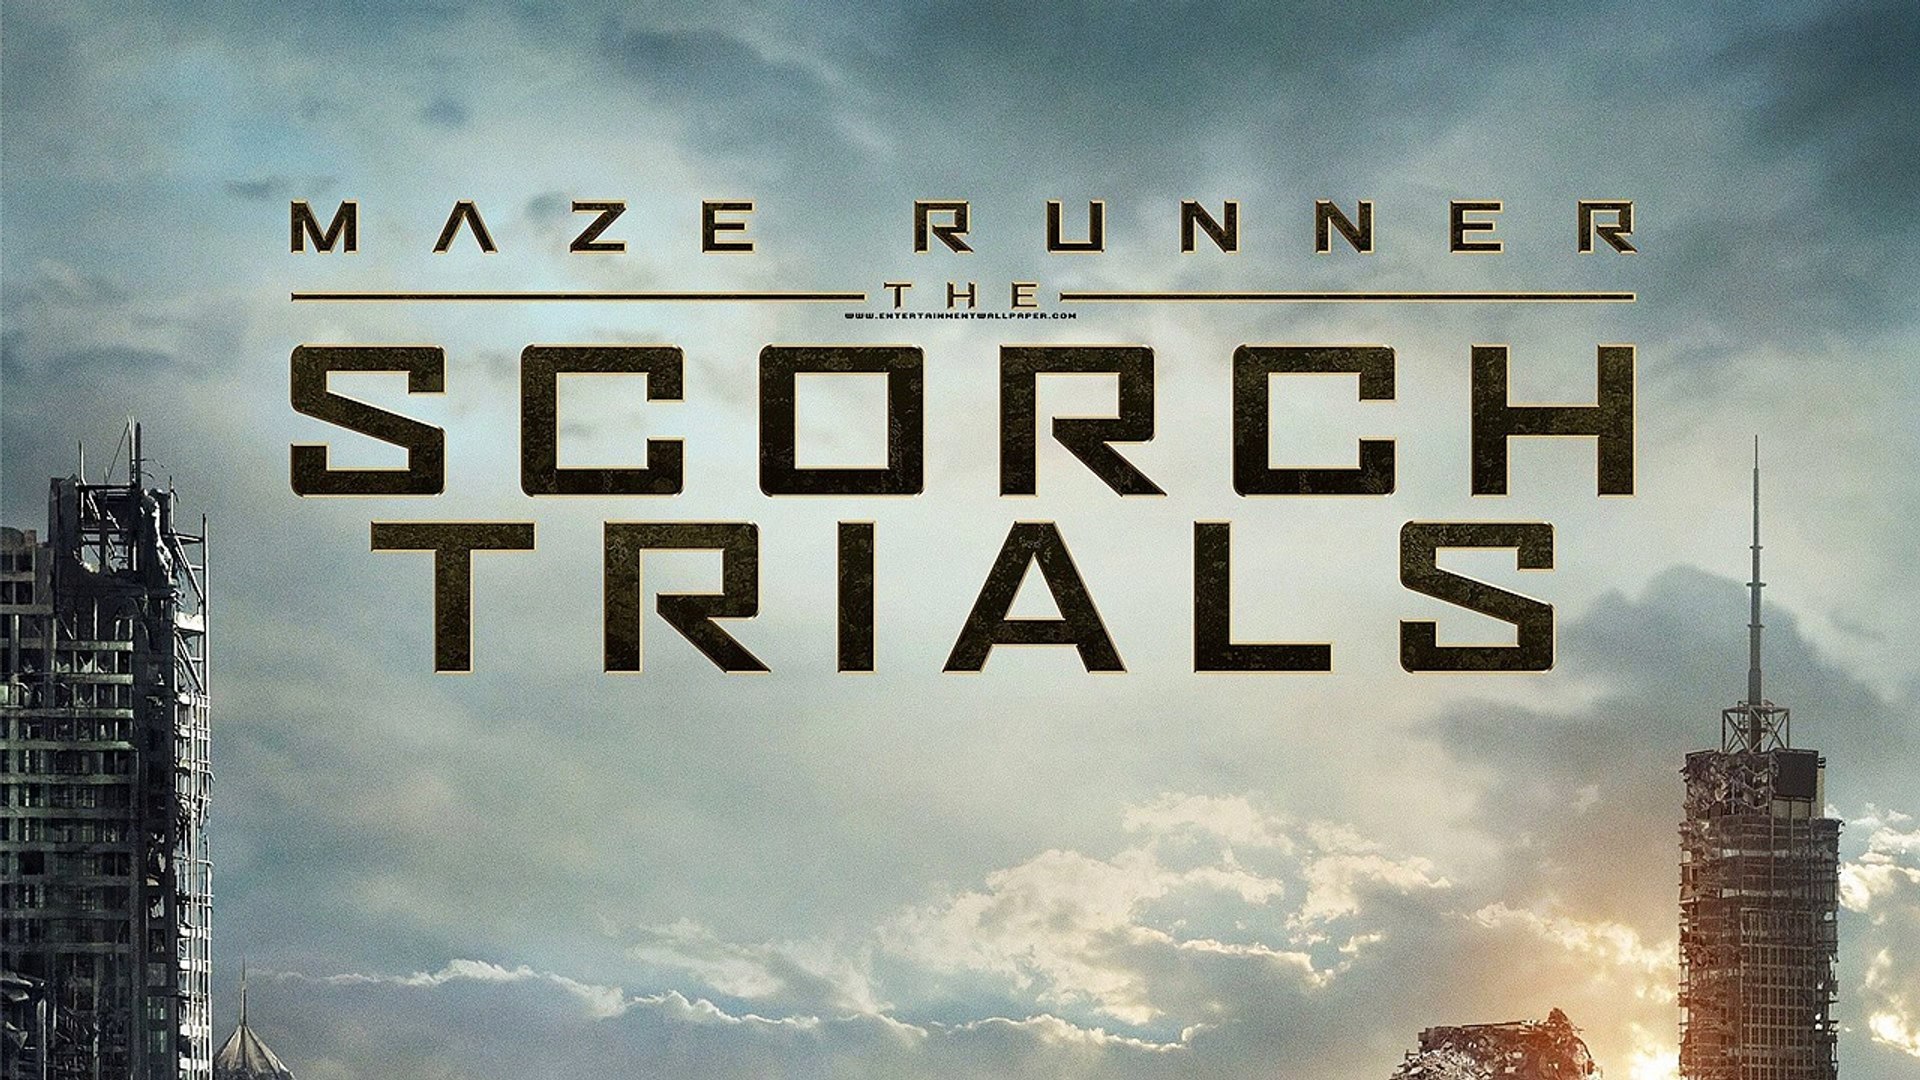 Maze runner 2. Maze Runner: Scorch Trials Постер. Бегущий в лабиринте испытание огнём 2015 Постер. Бегущий в лабиринте обои.